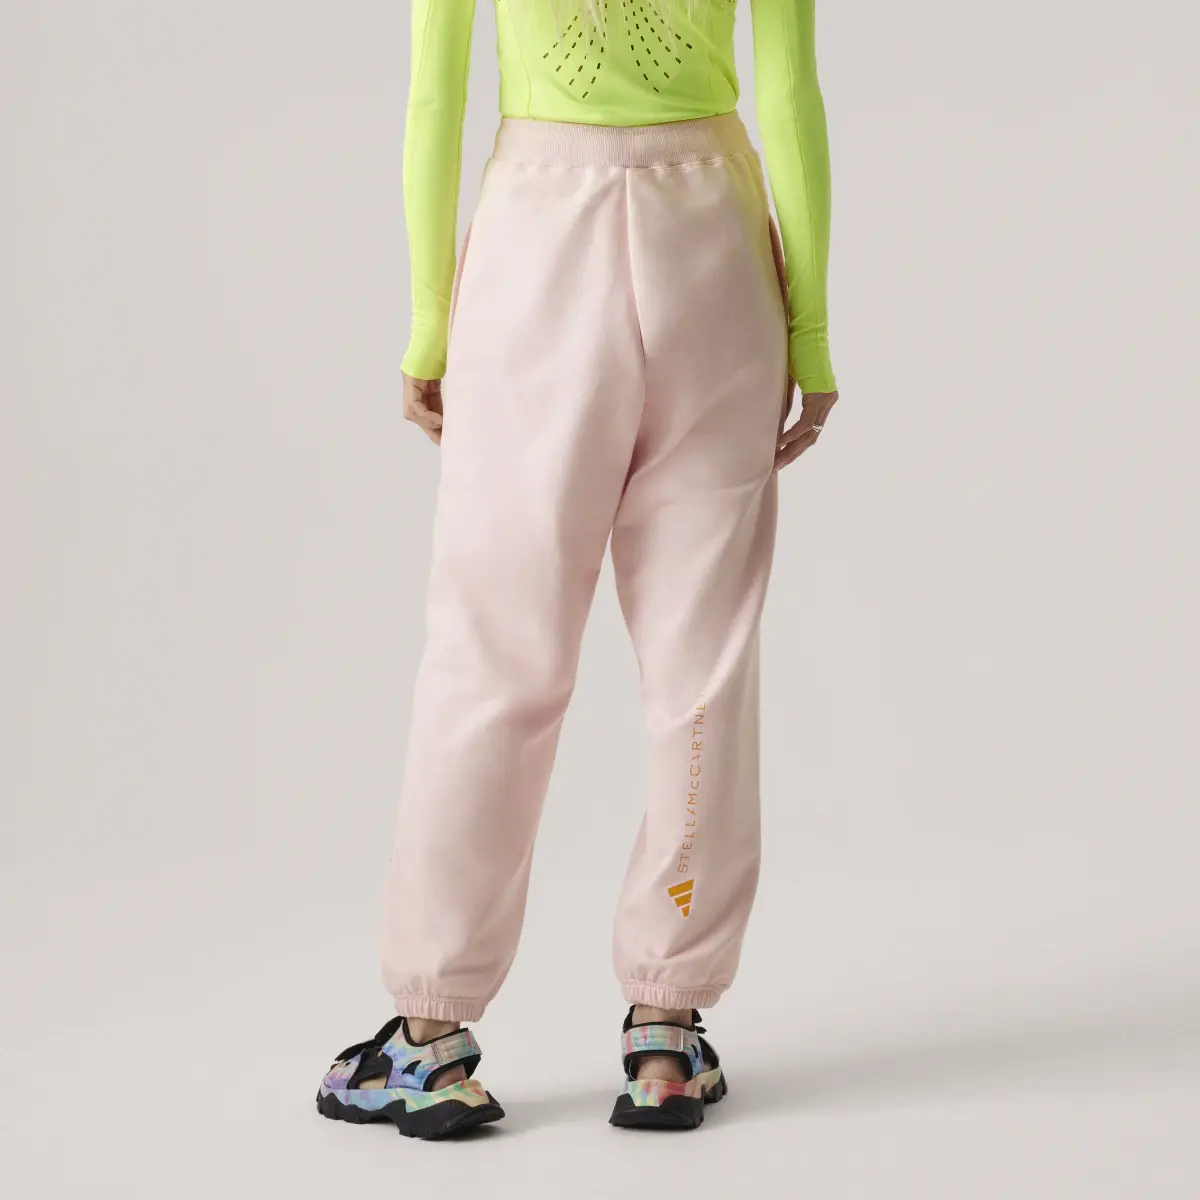 Adidas by Stella McCartney Sportswear Joggers (Gender Neutral). 3